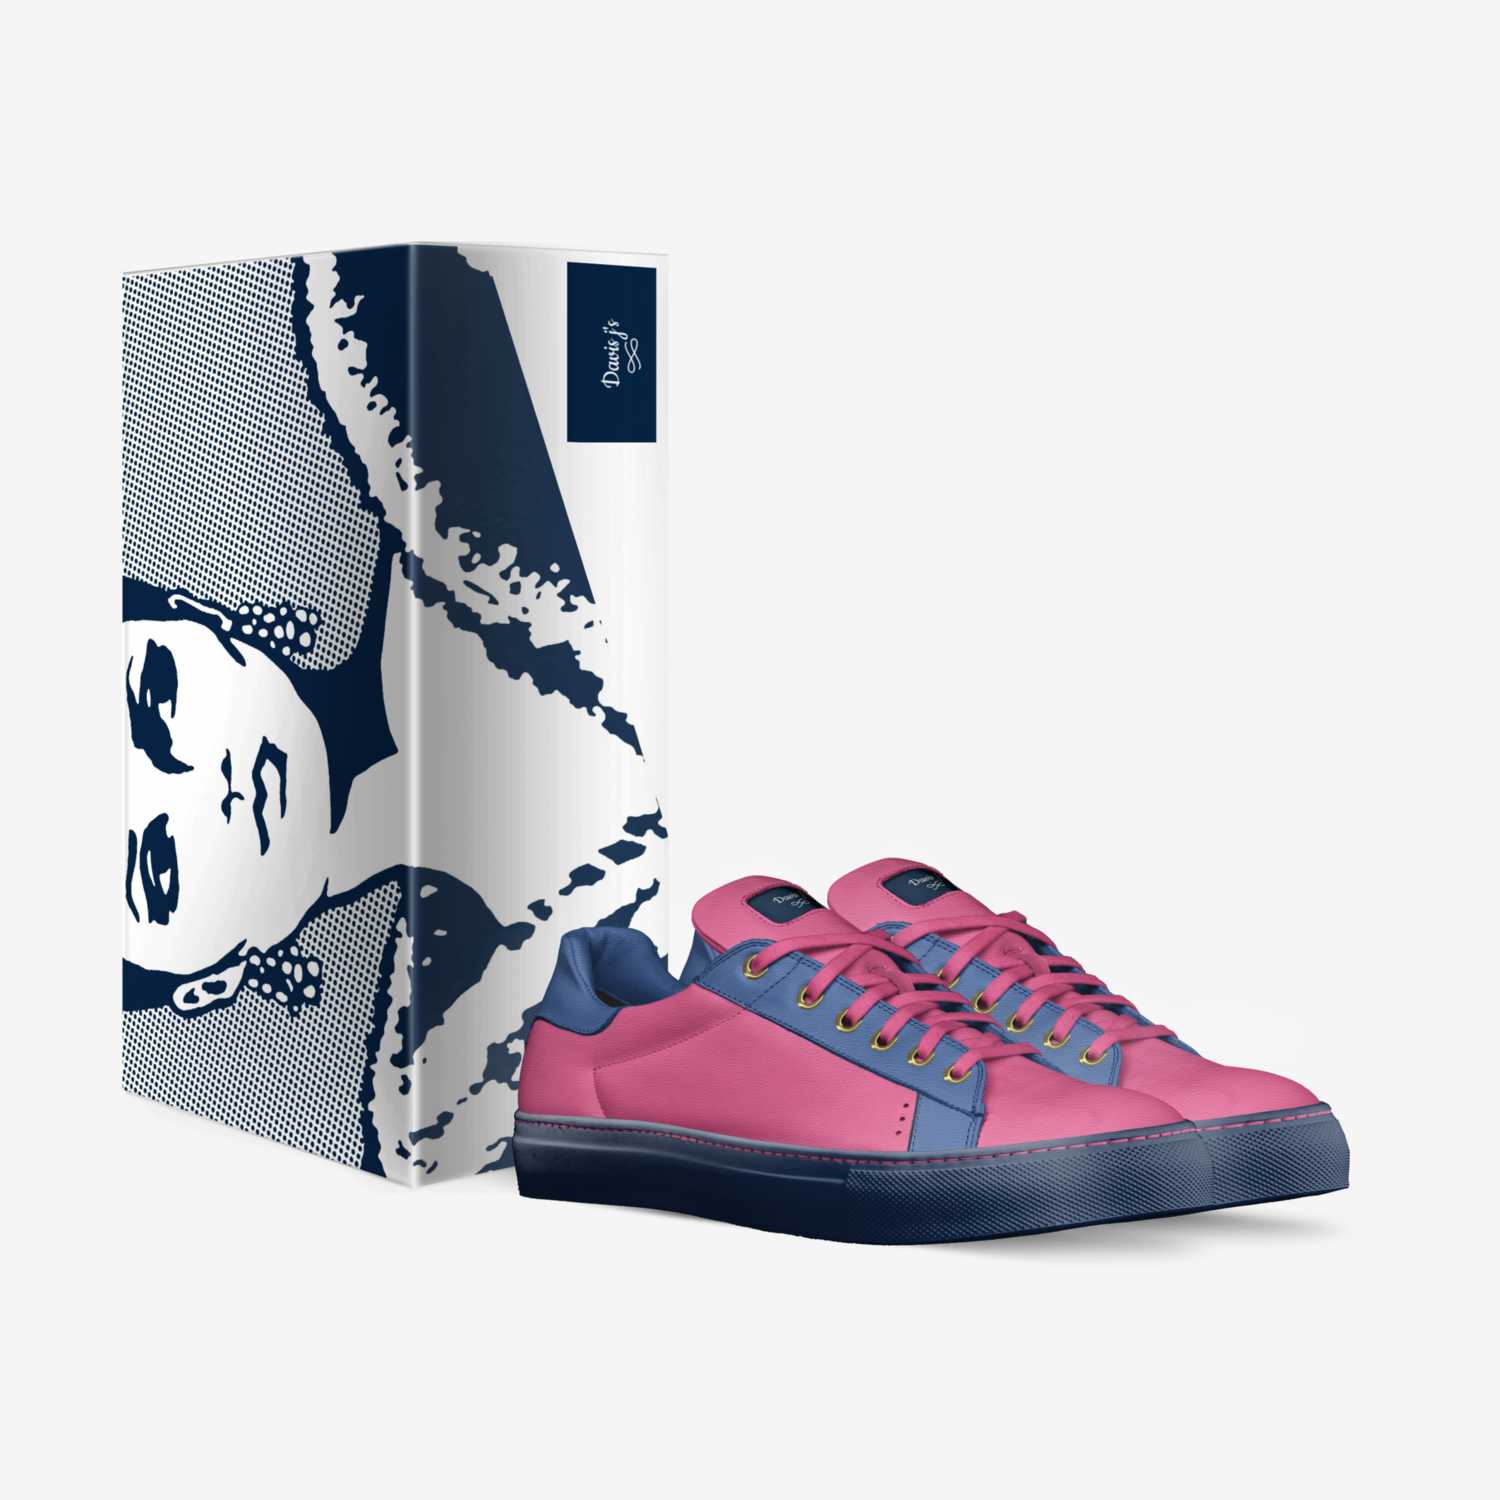 Davis j's custom made in Italy shoes by Jatorriedavis | Box view